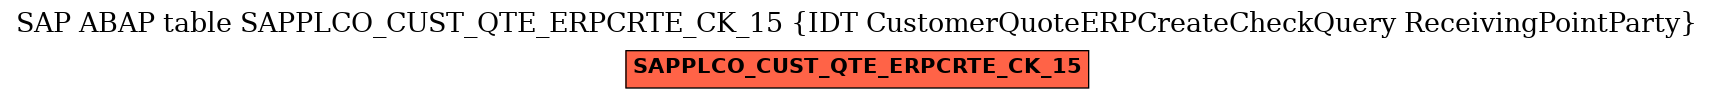 E-R Diagram for table SAPPLCO_CUST_QTE_ERPCRTE_CK_15 (IDT CustomerQuoteERPCreateCheckQuery ReceivingPointParty)